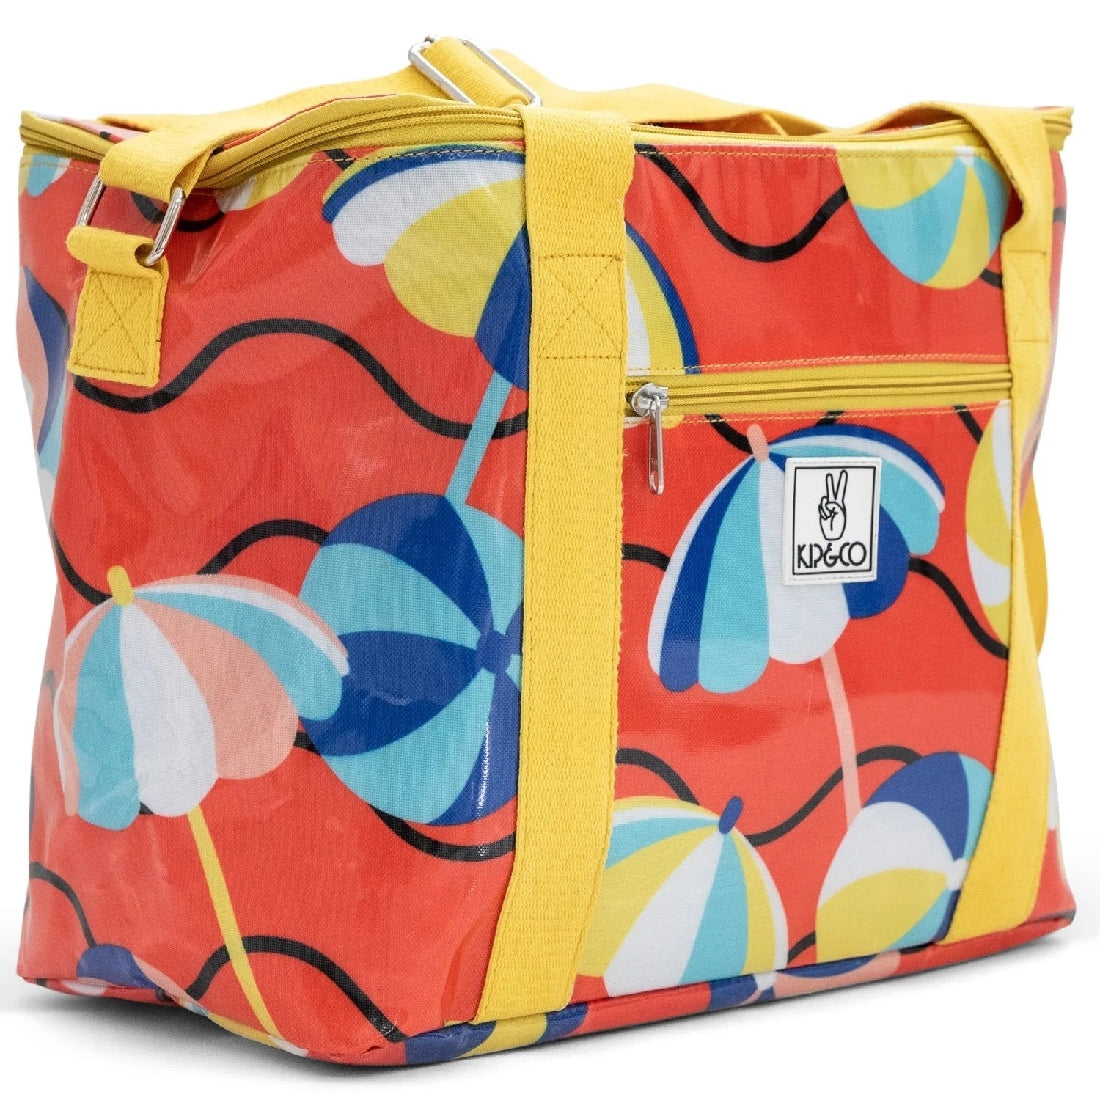 Kip & Co Parasol Cooler Bag *sale*